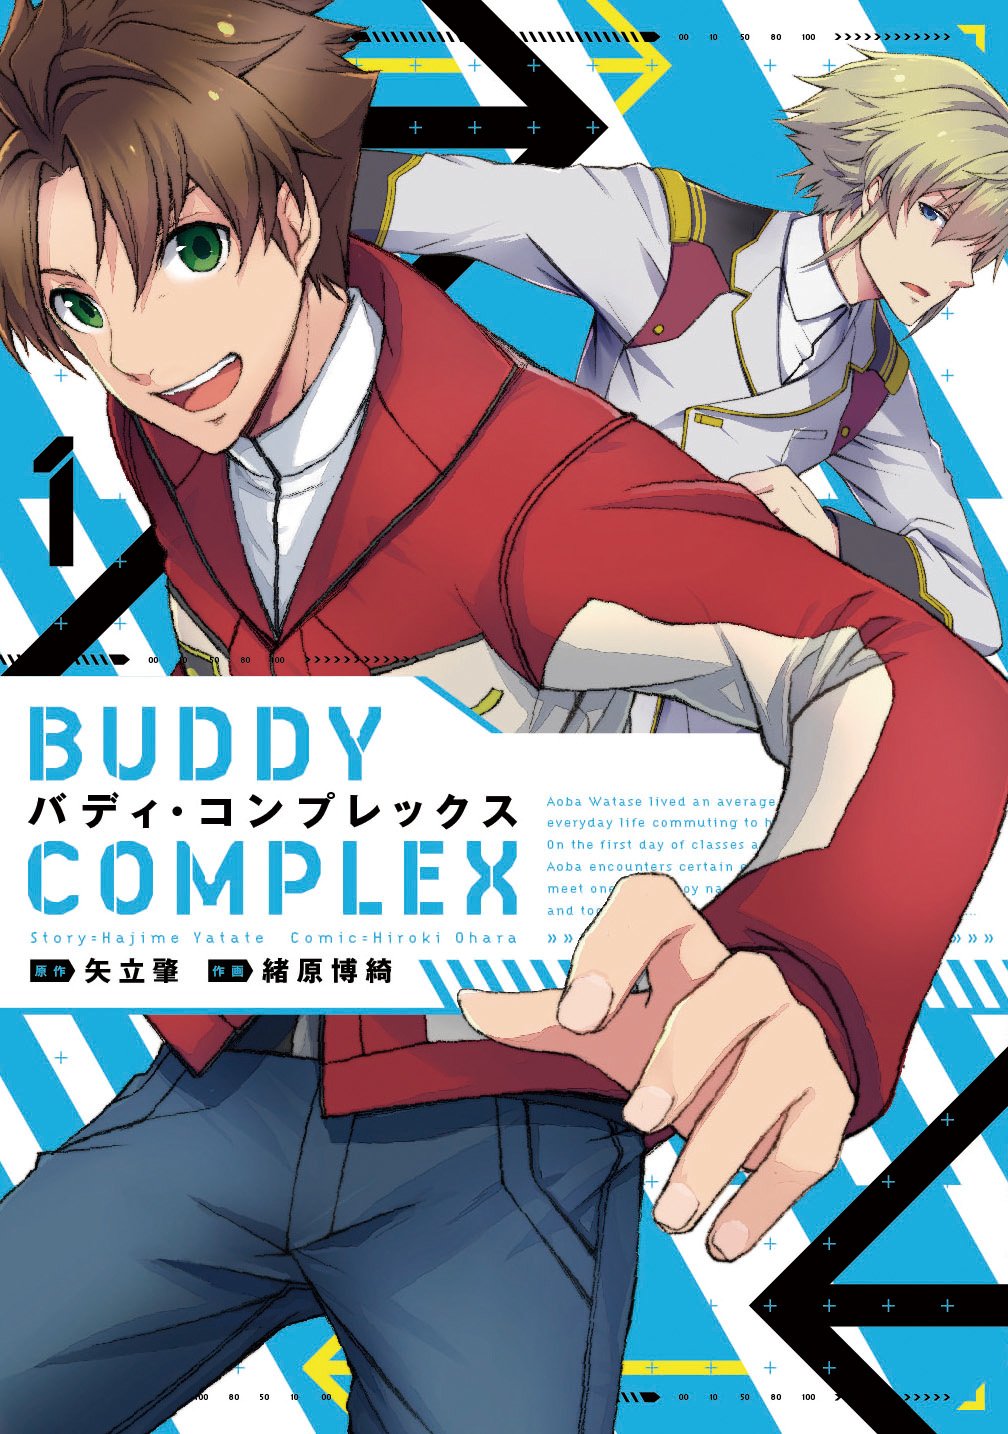 Buddy Complex (01) Folder Icon by TpaBoOkyP on DeviantArt